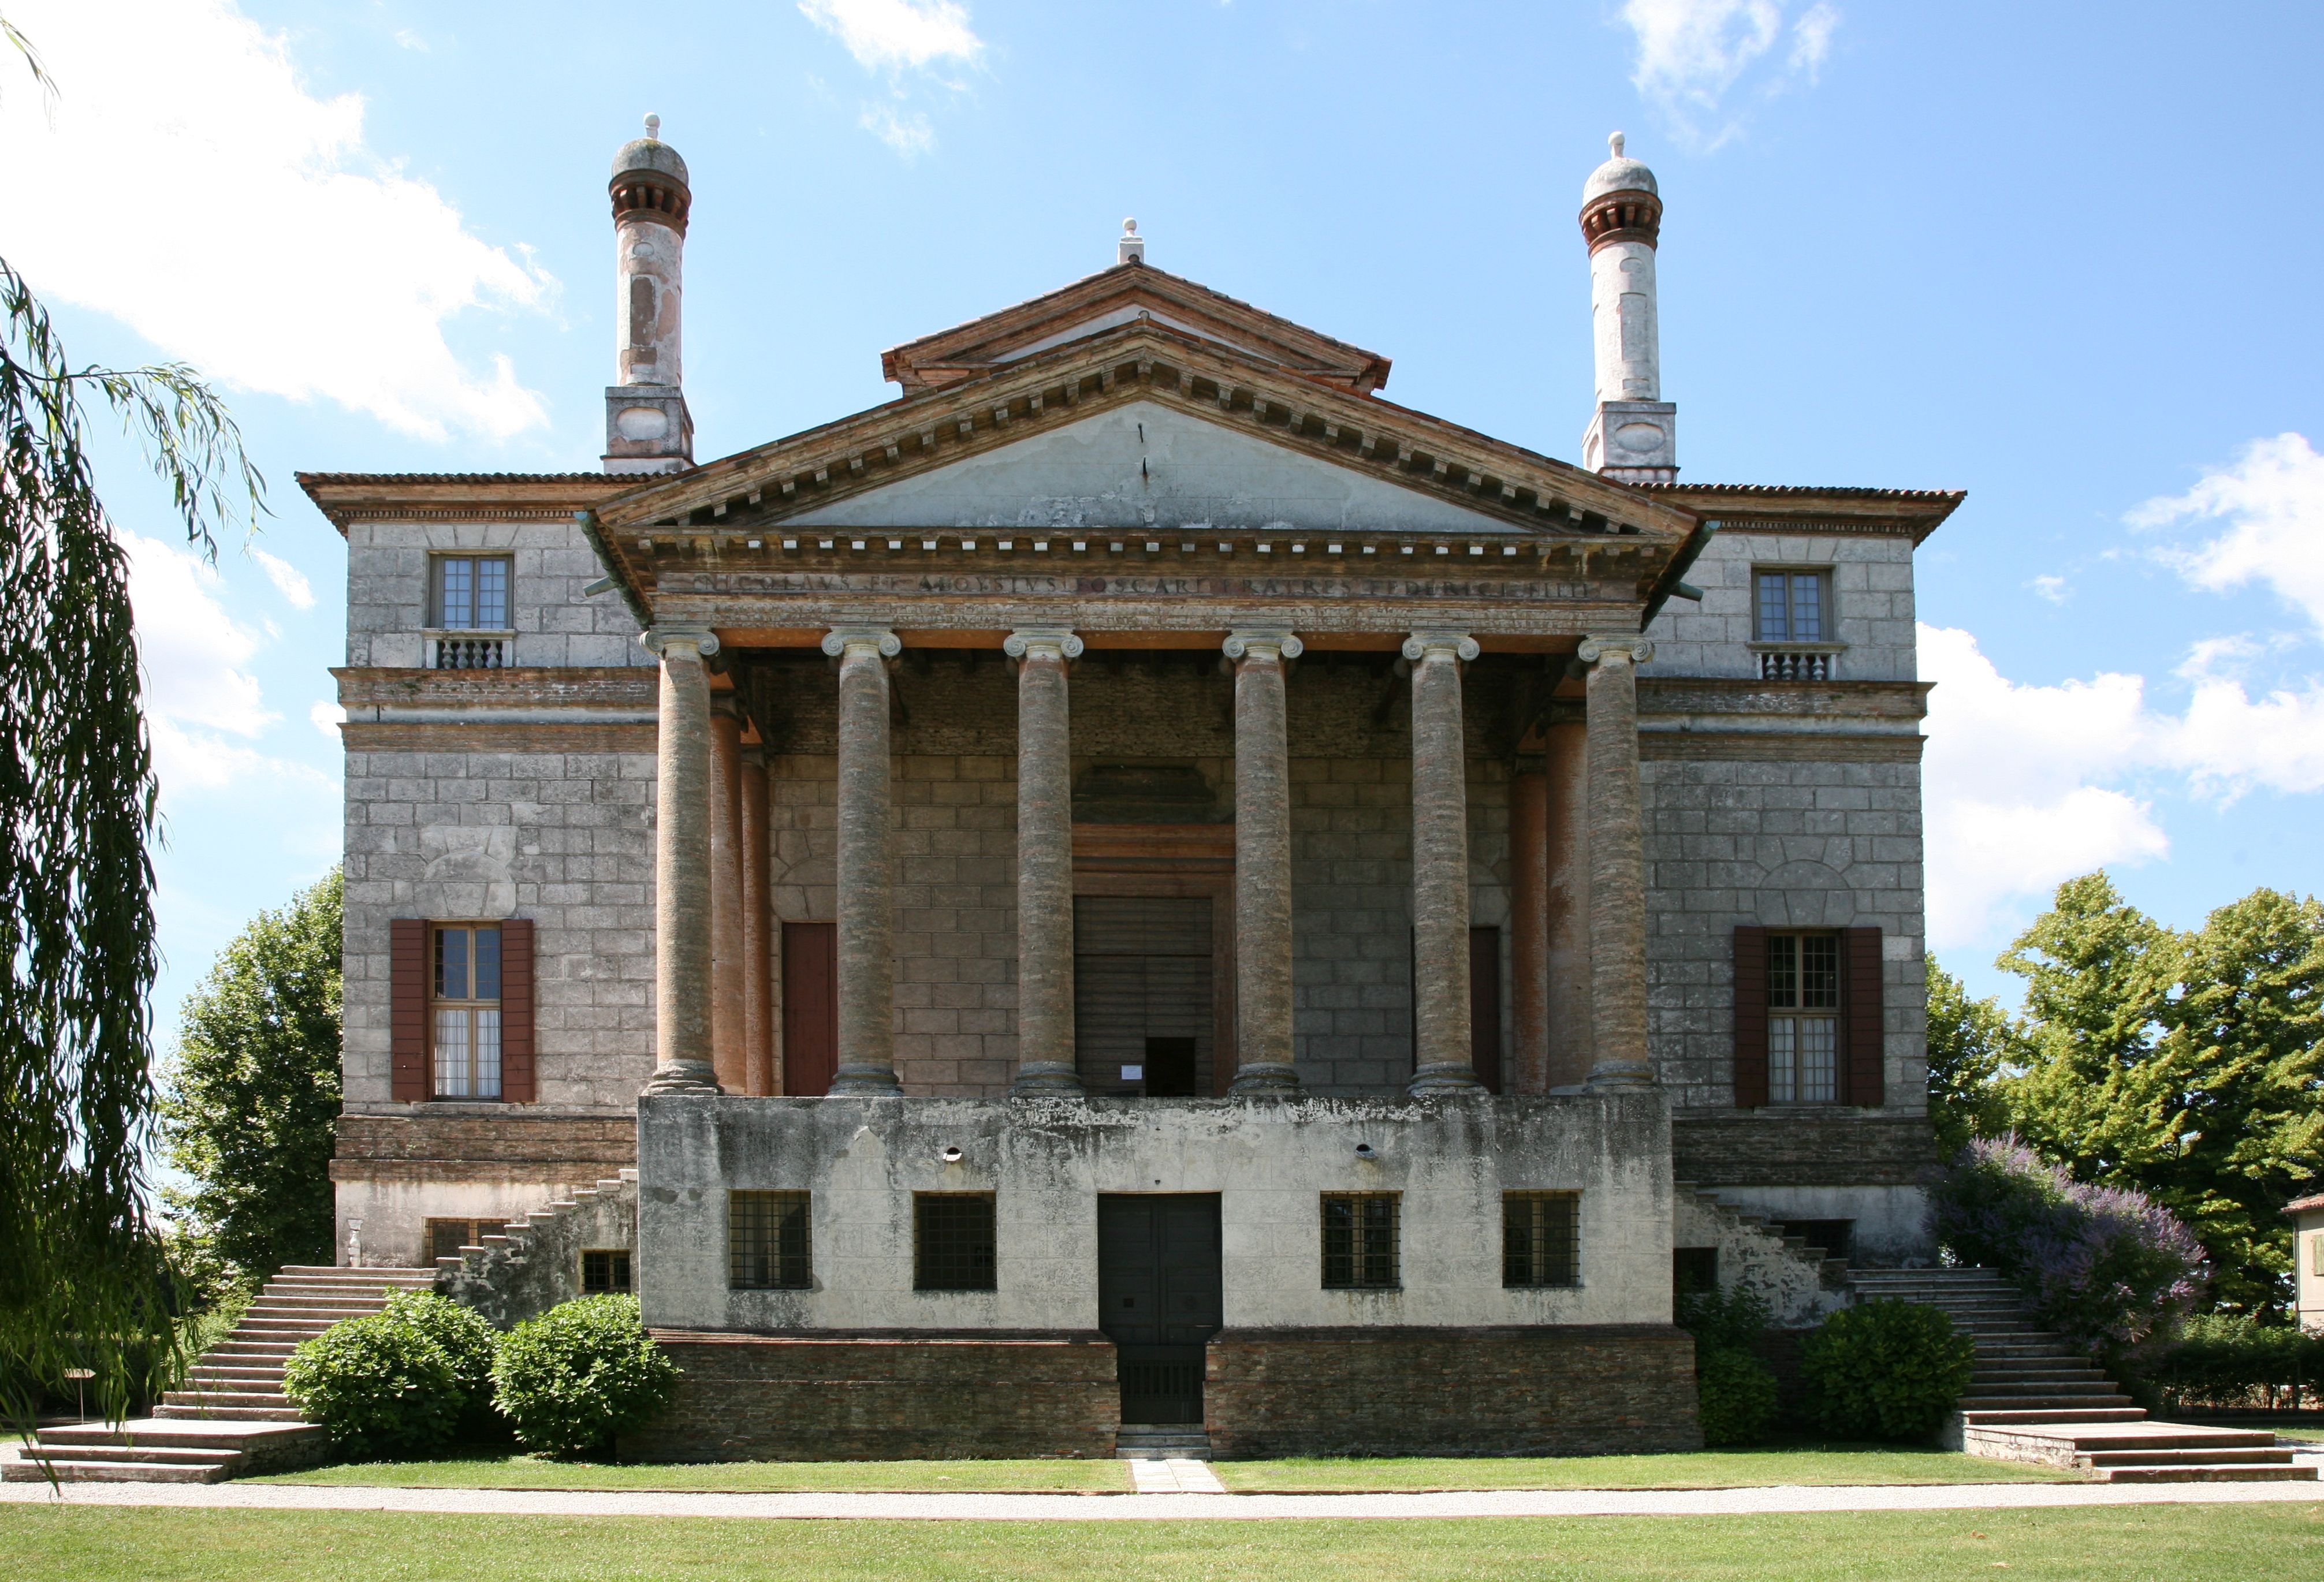 Villa Foscari also known as "La Malcontenta", Mira (VE), Italy